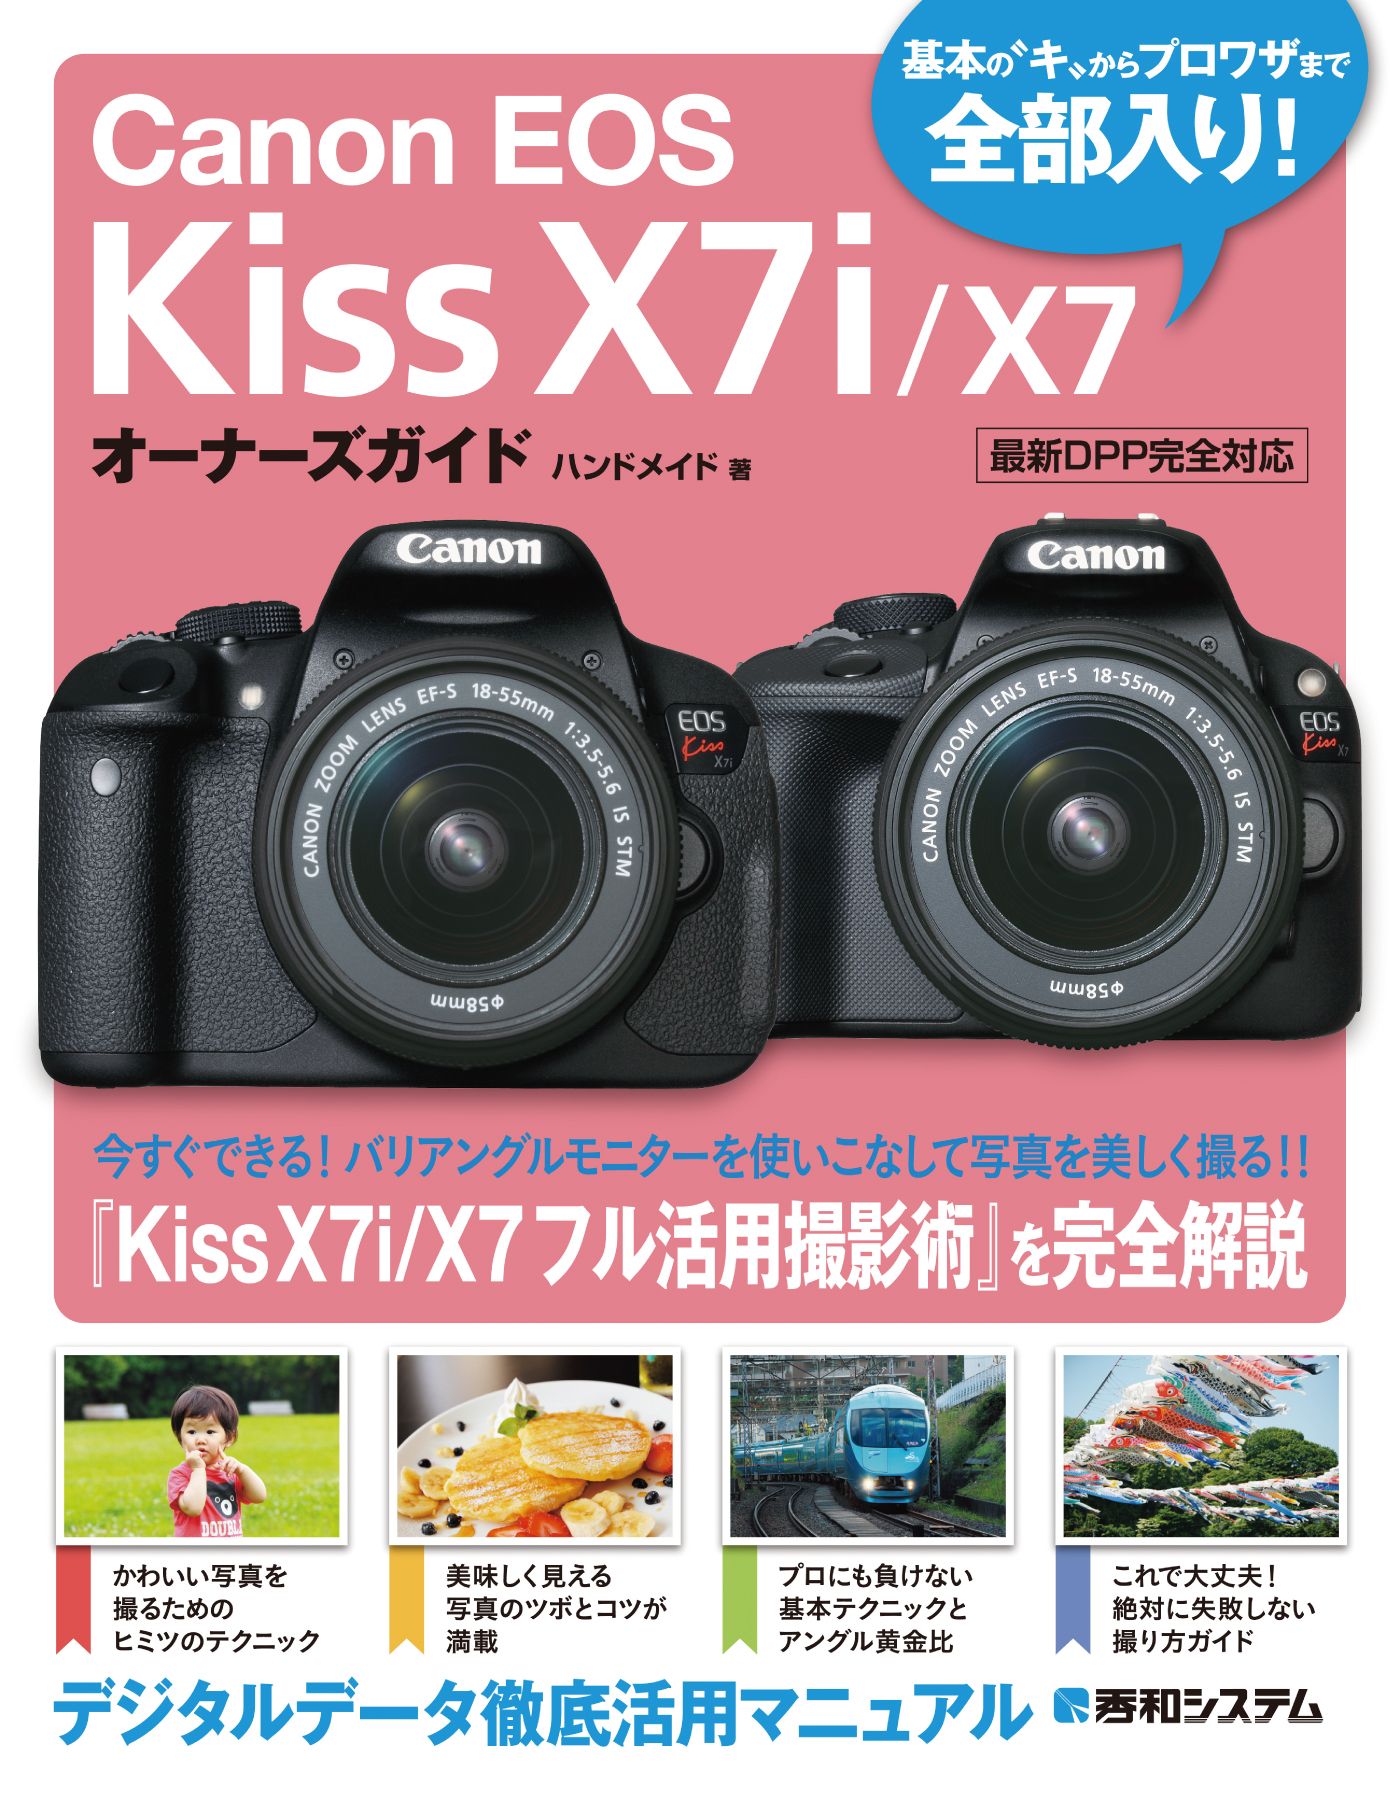 Canon EOS Kiss X7i/X7 オーナーズガイド - ハンドメイド - 漫画・無料